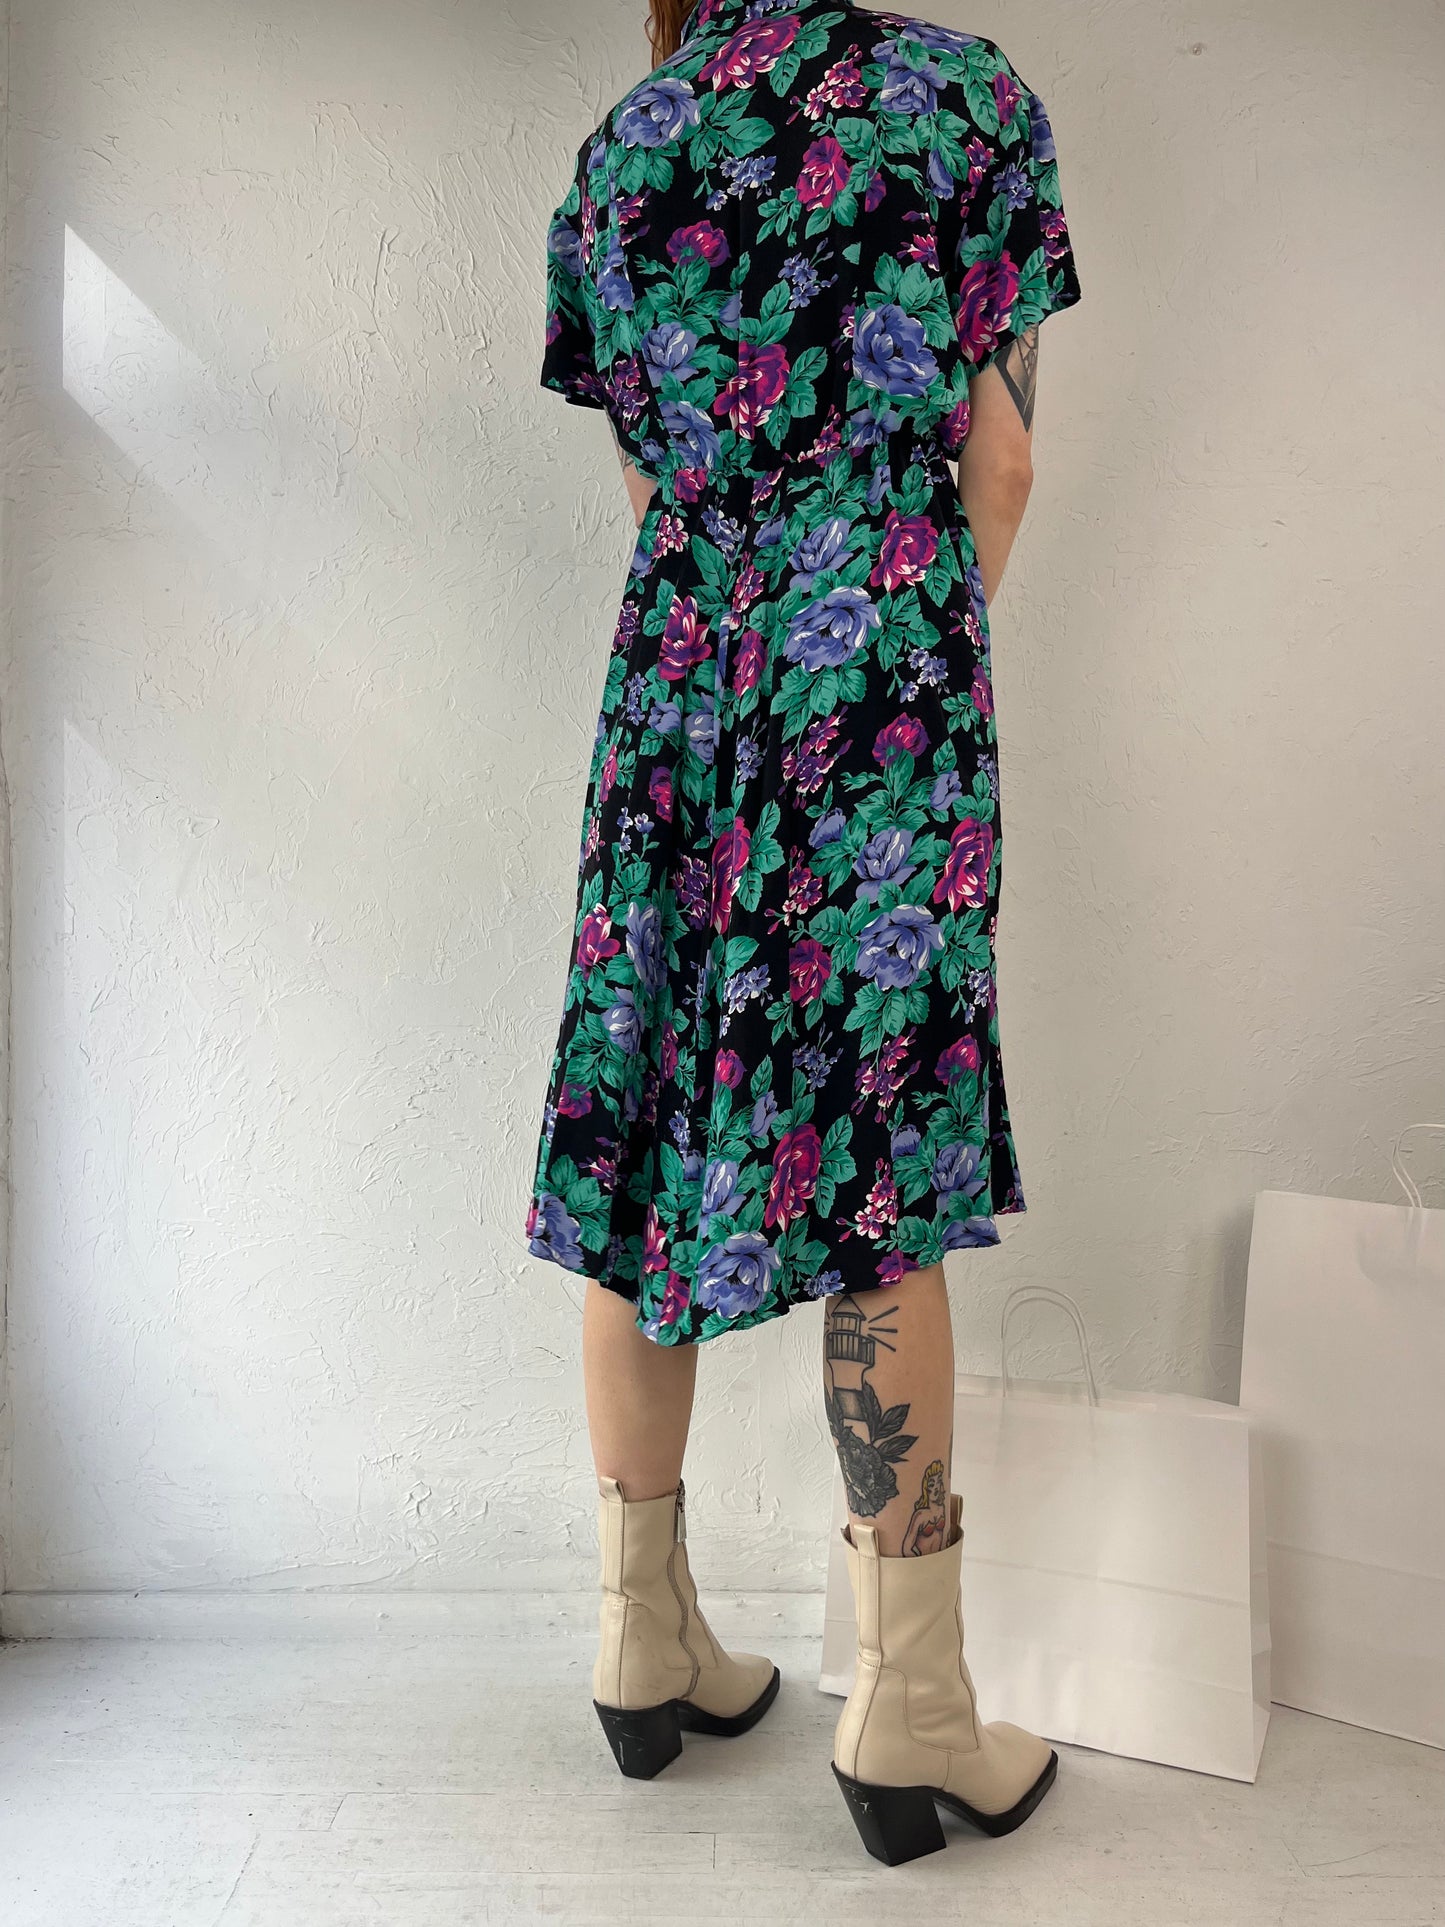 90s 'Nina Piccalino' Black Floral Print Rayon Dress / Small